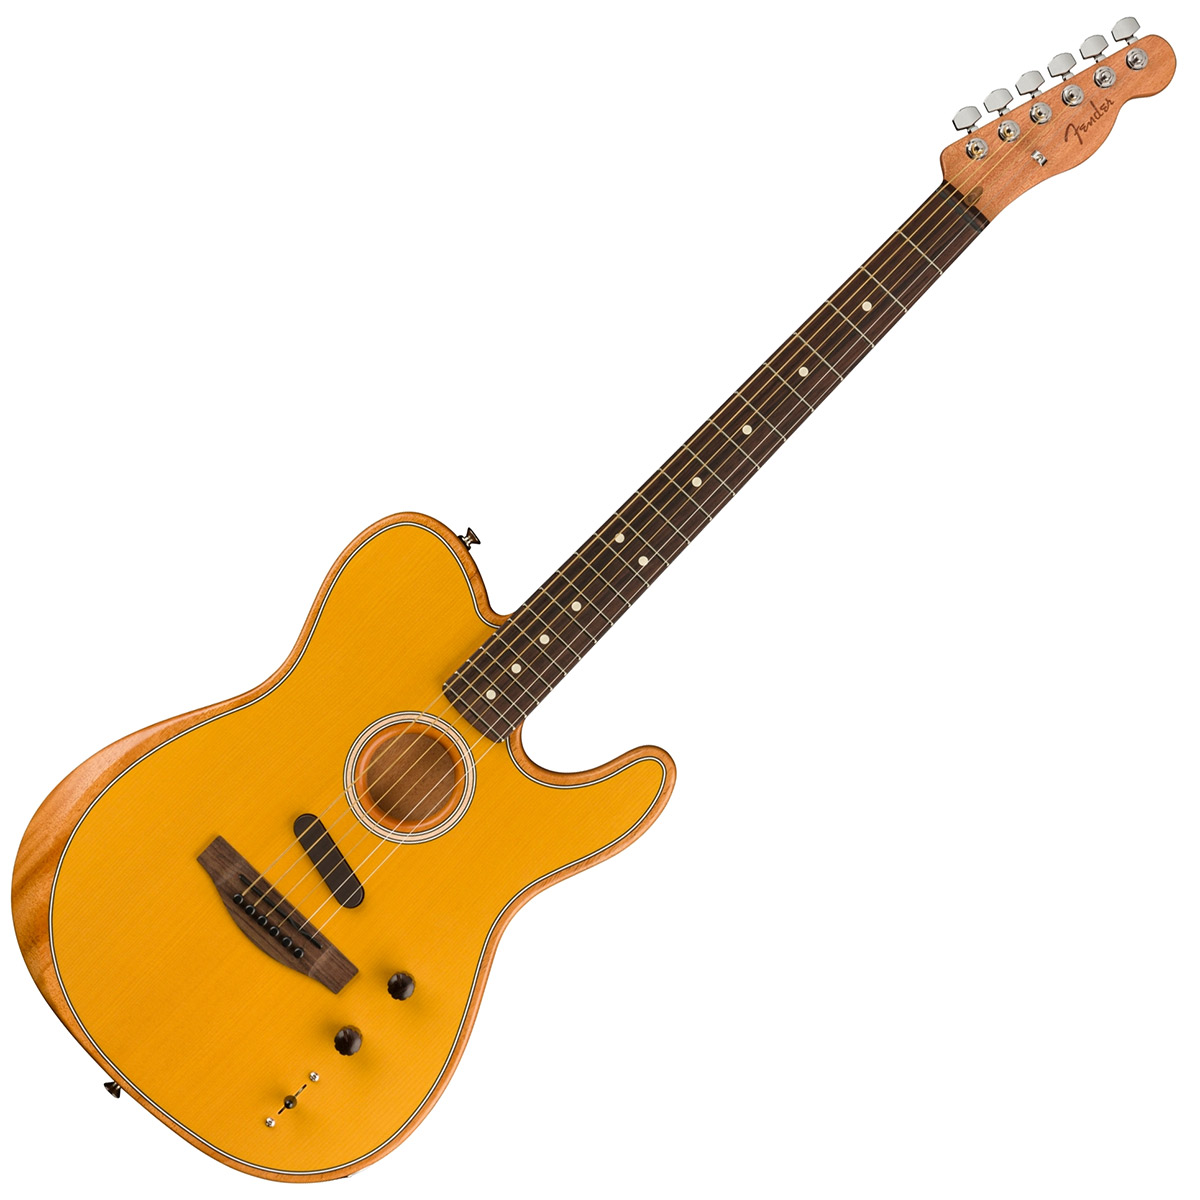 Fender フェンダー ACOUSTASONIC PLAYER TELECASTER BTB Butterscotch Blonde エレアコギター アコスタソニック プレイヤー